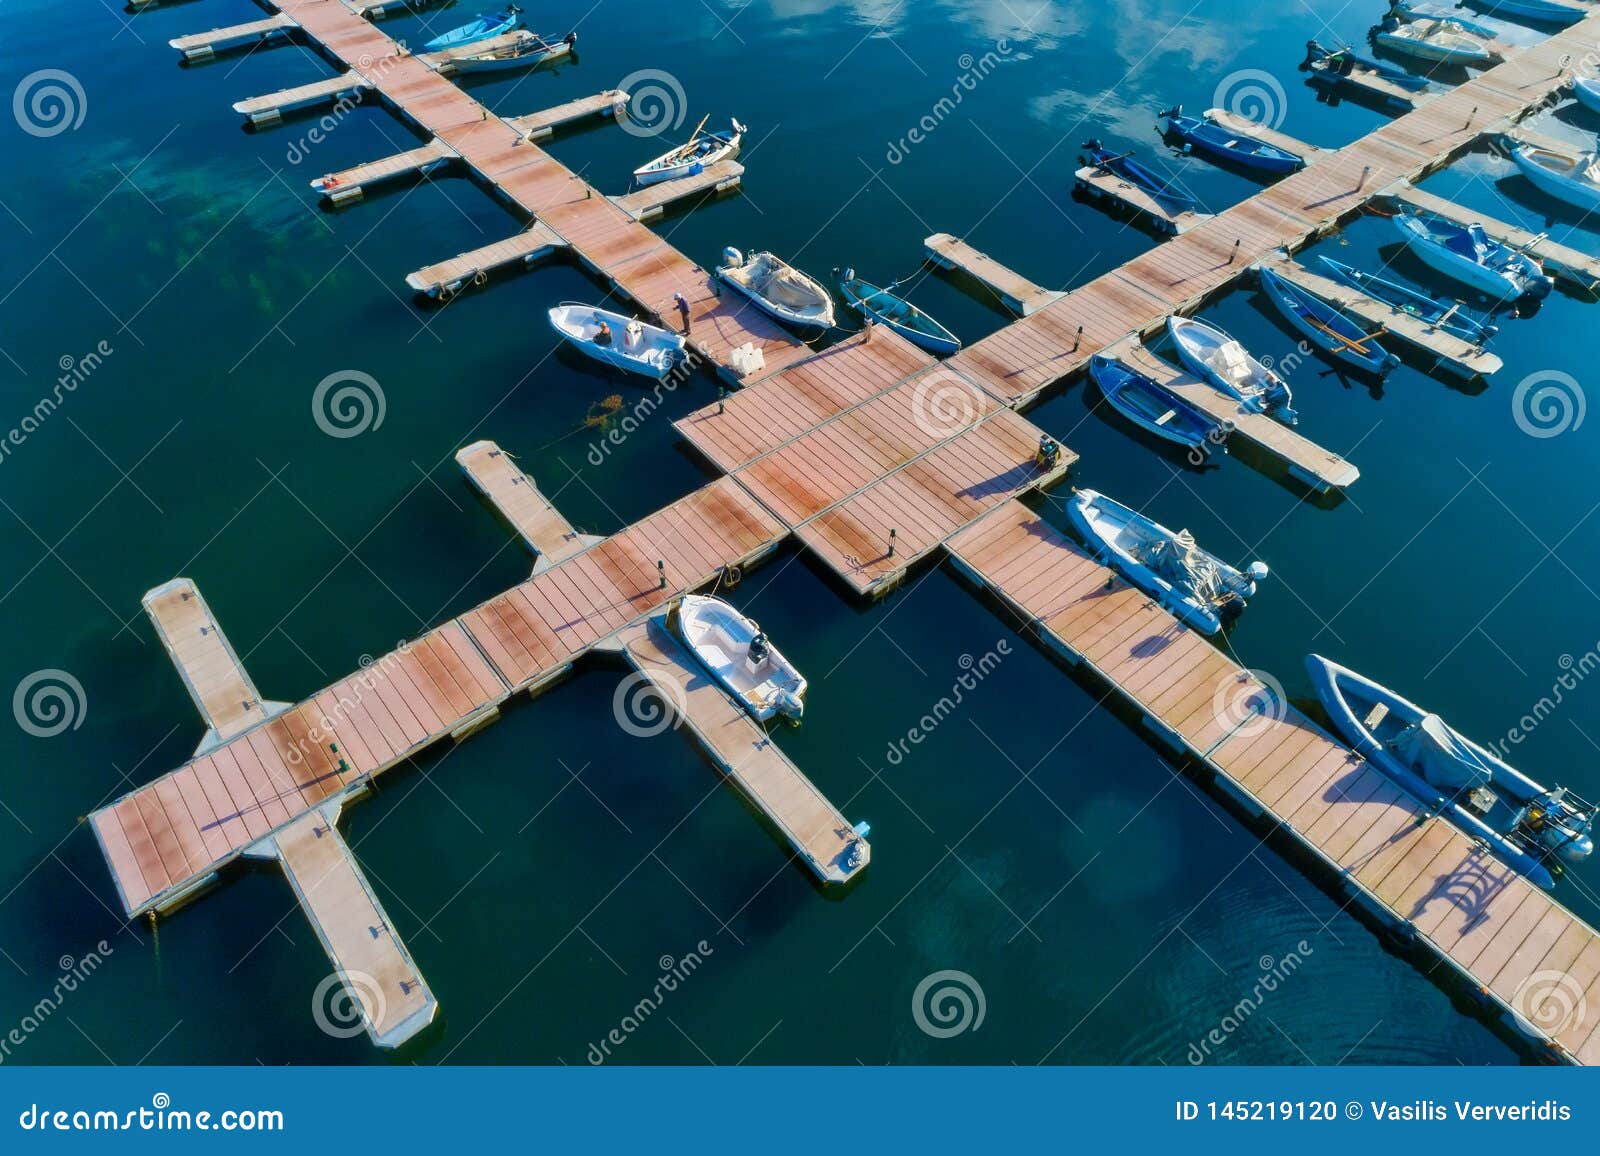 motorboats dock